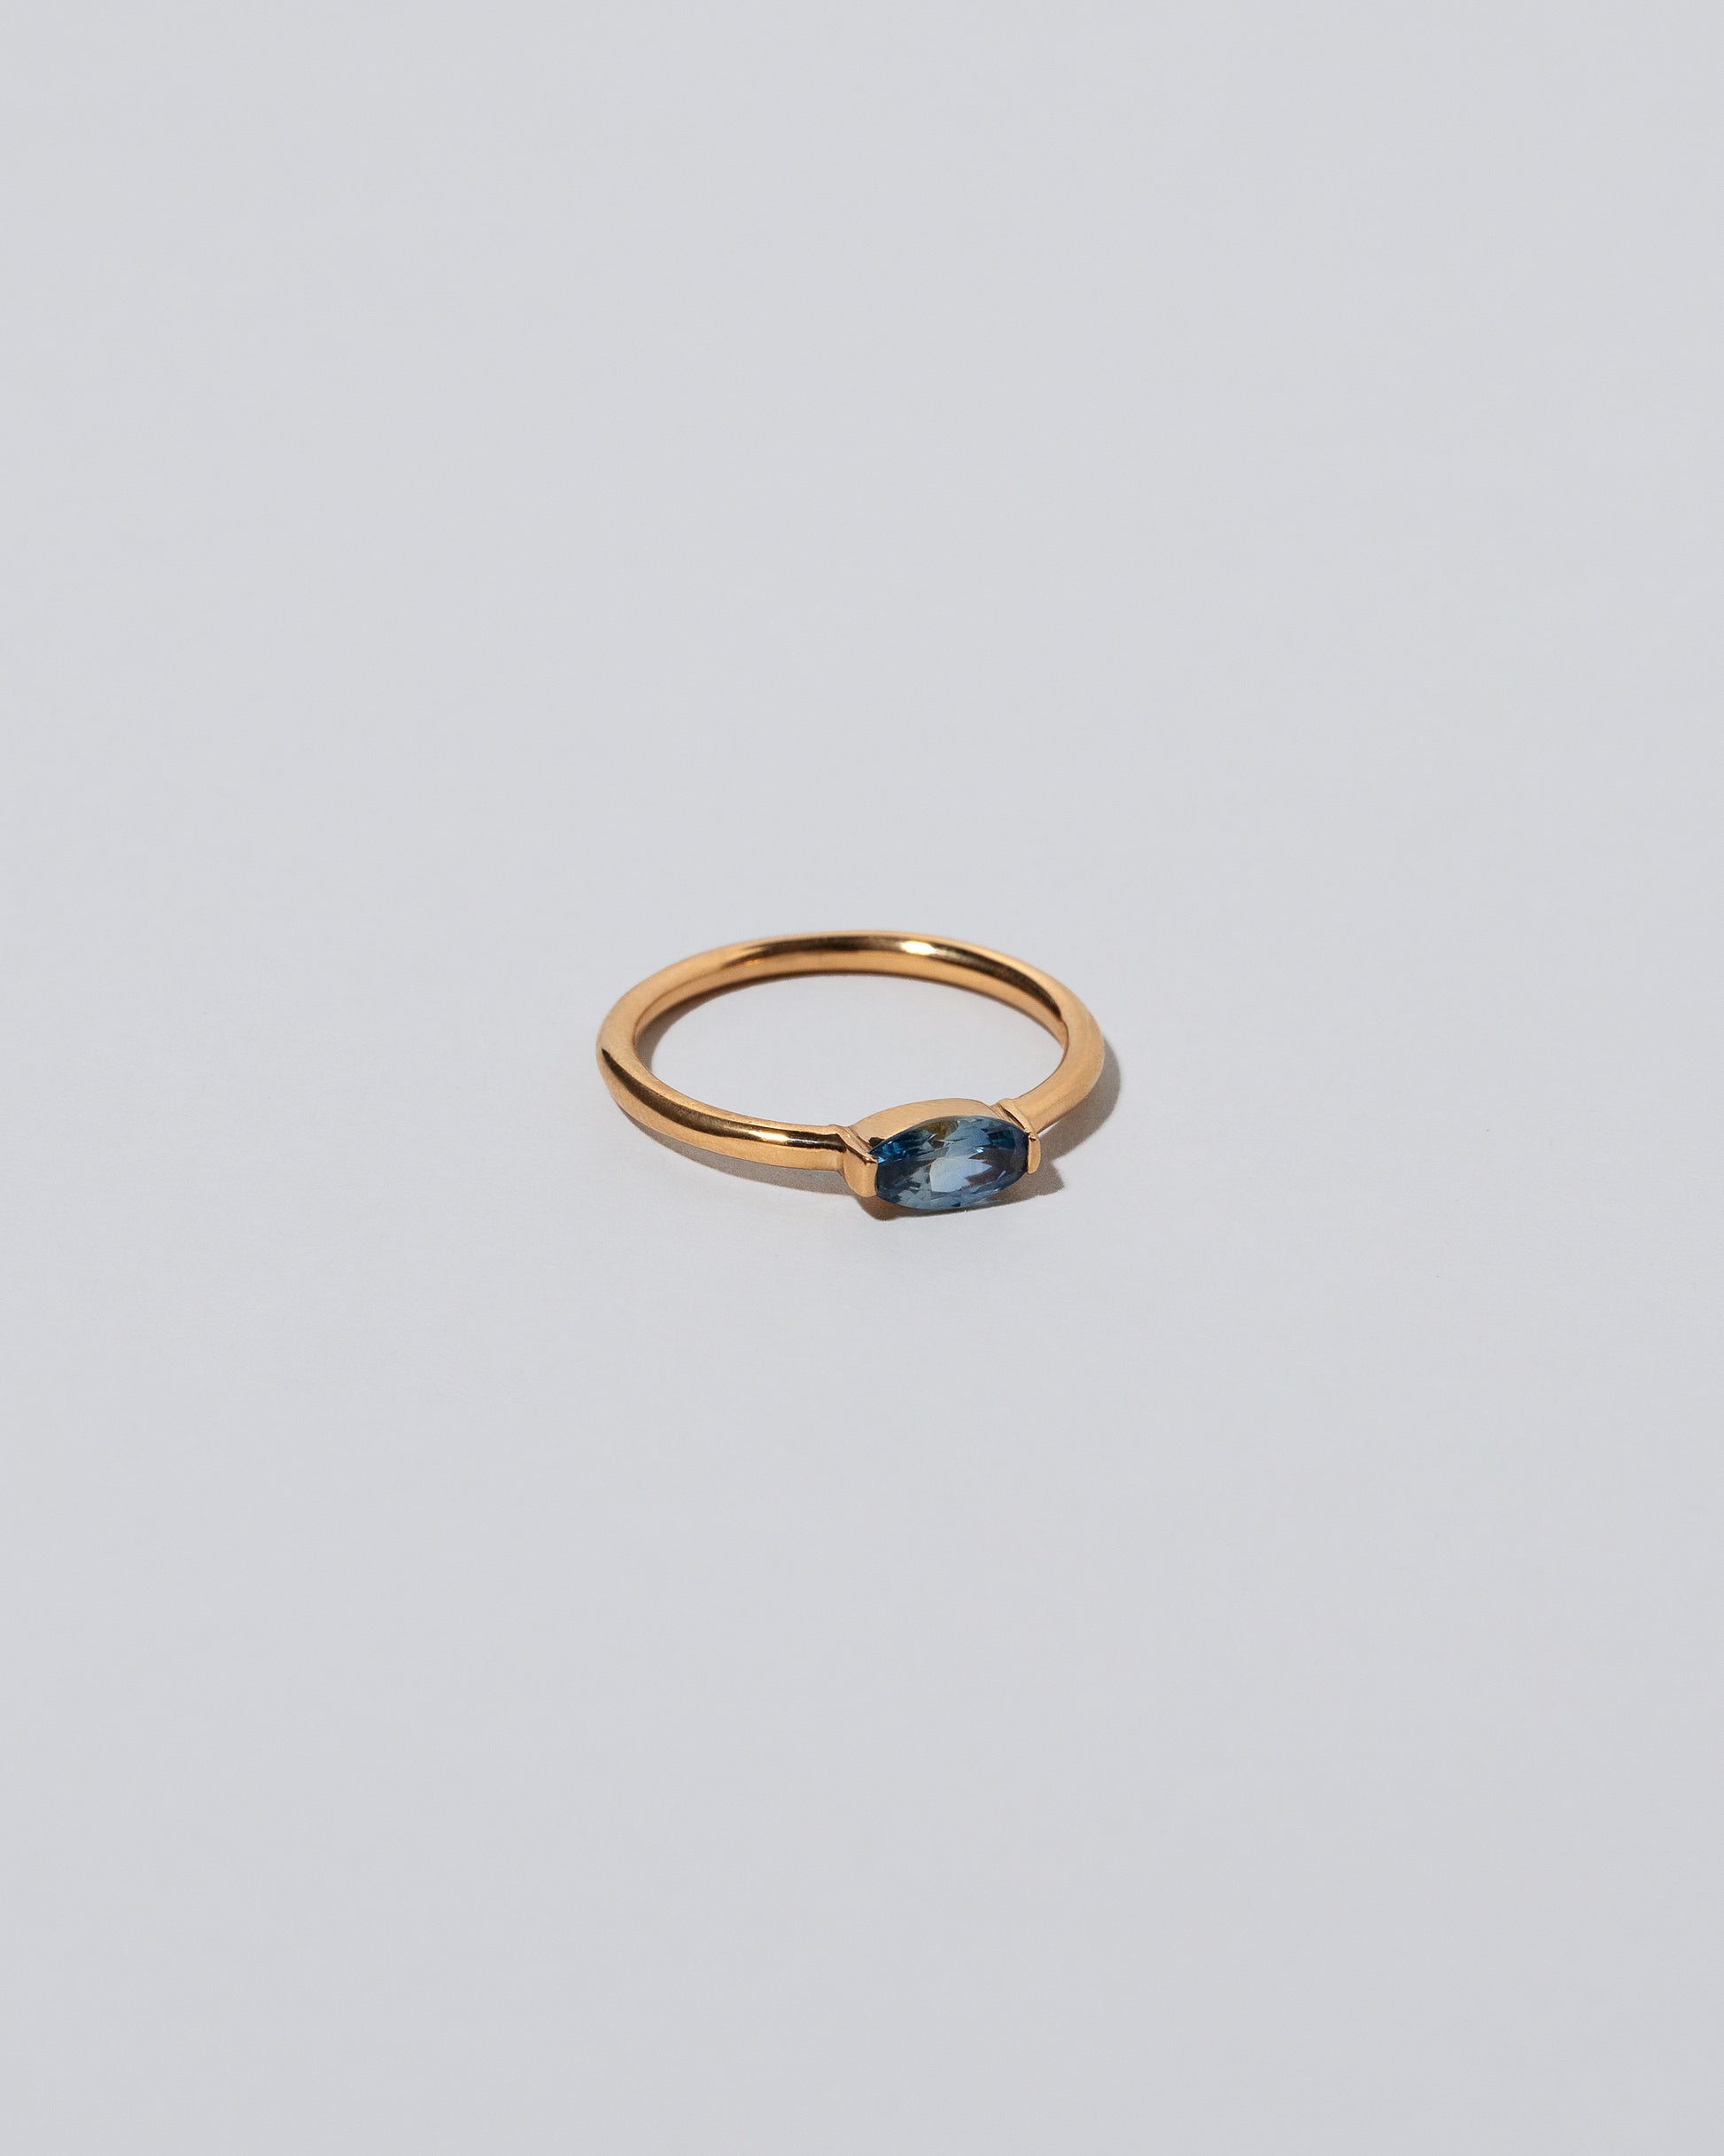 Blue Devant Ring on light color background.